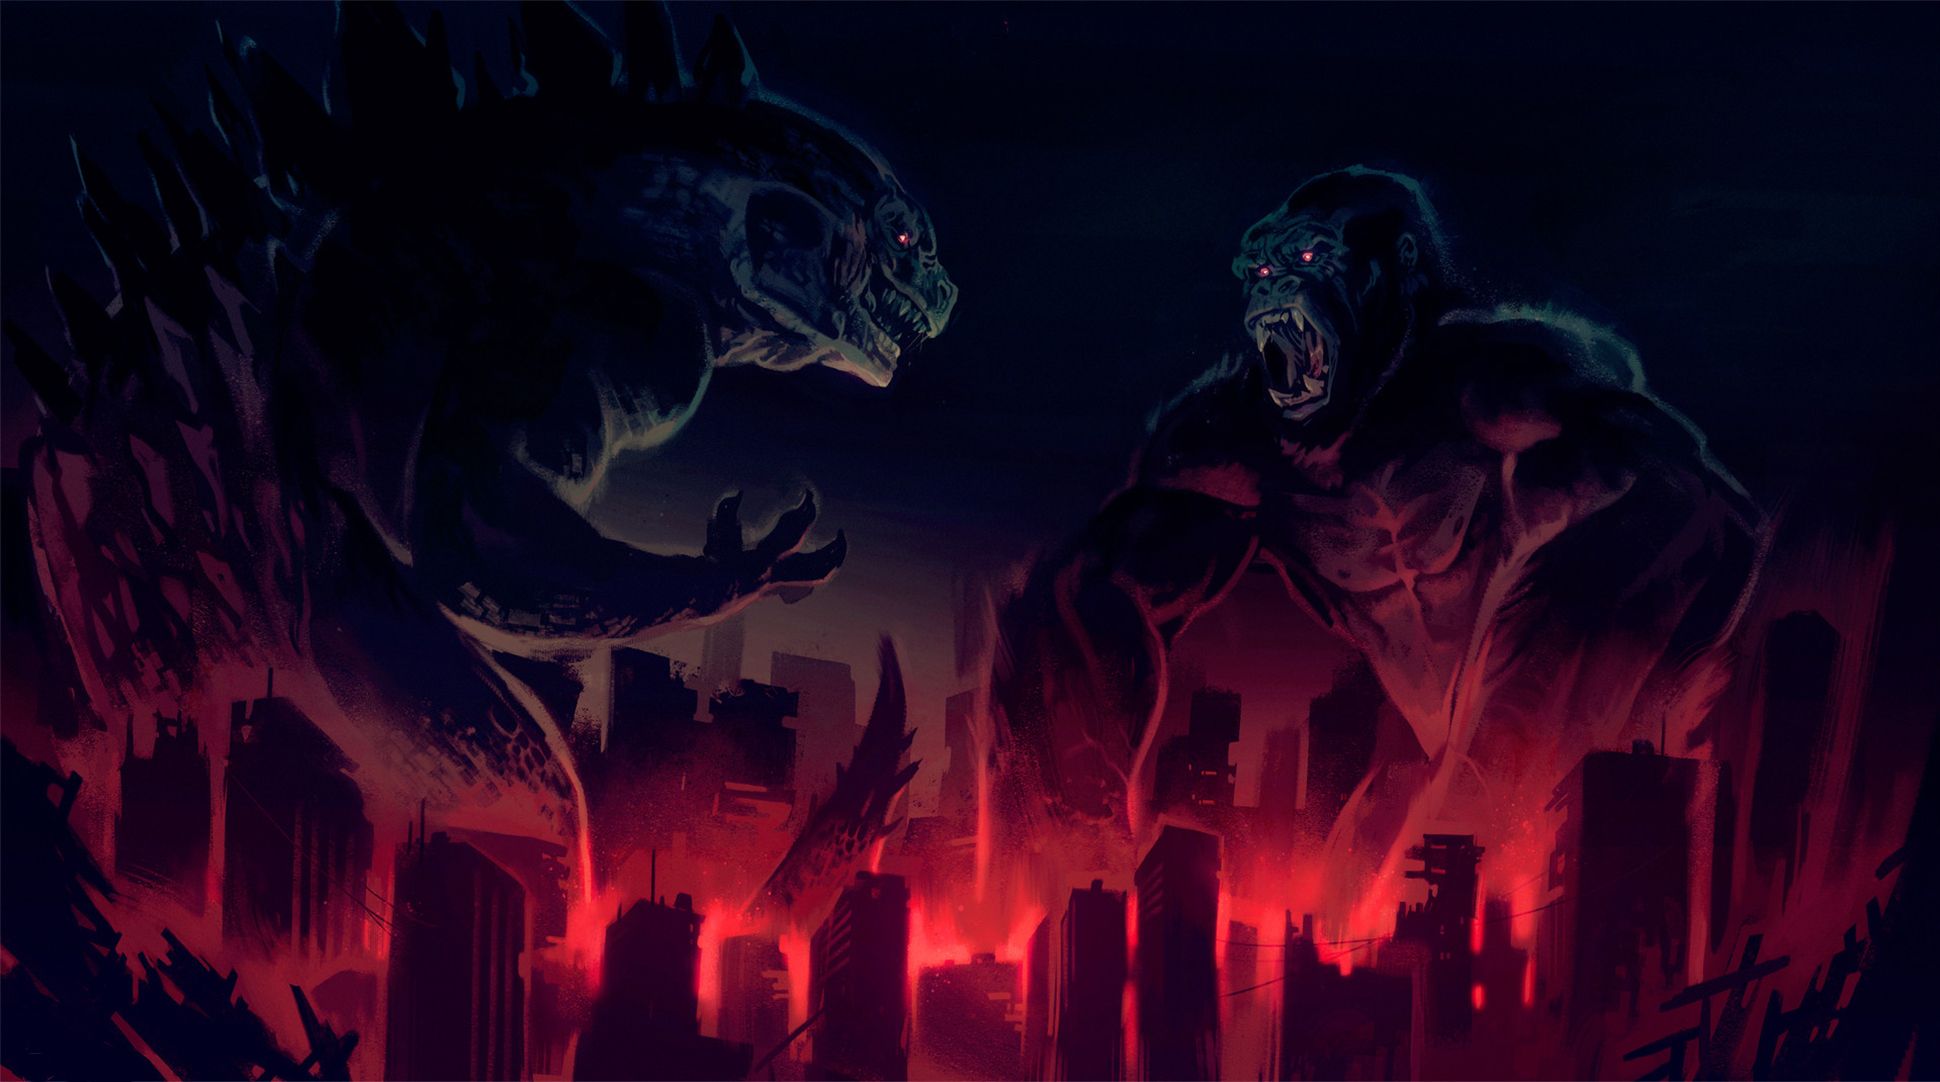 King Kong vs Godzilla Artwork 2560x1600 Resolution Wallpaper, HD Artist 4K Wallpaper, Image, Photo and Background